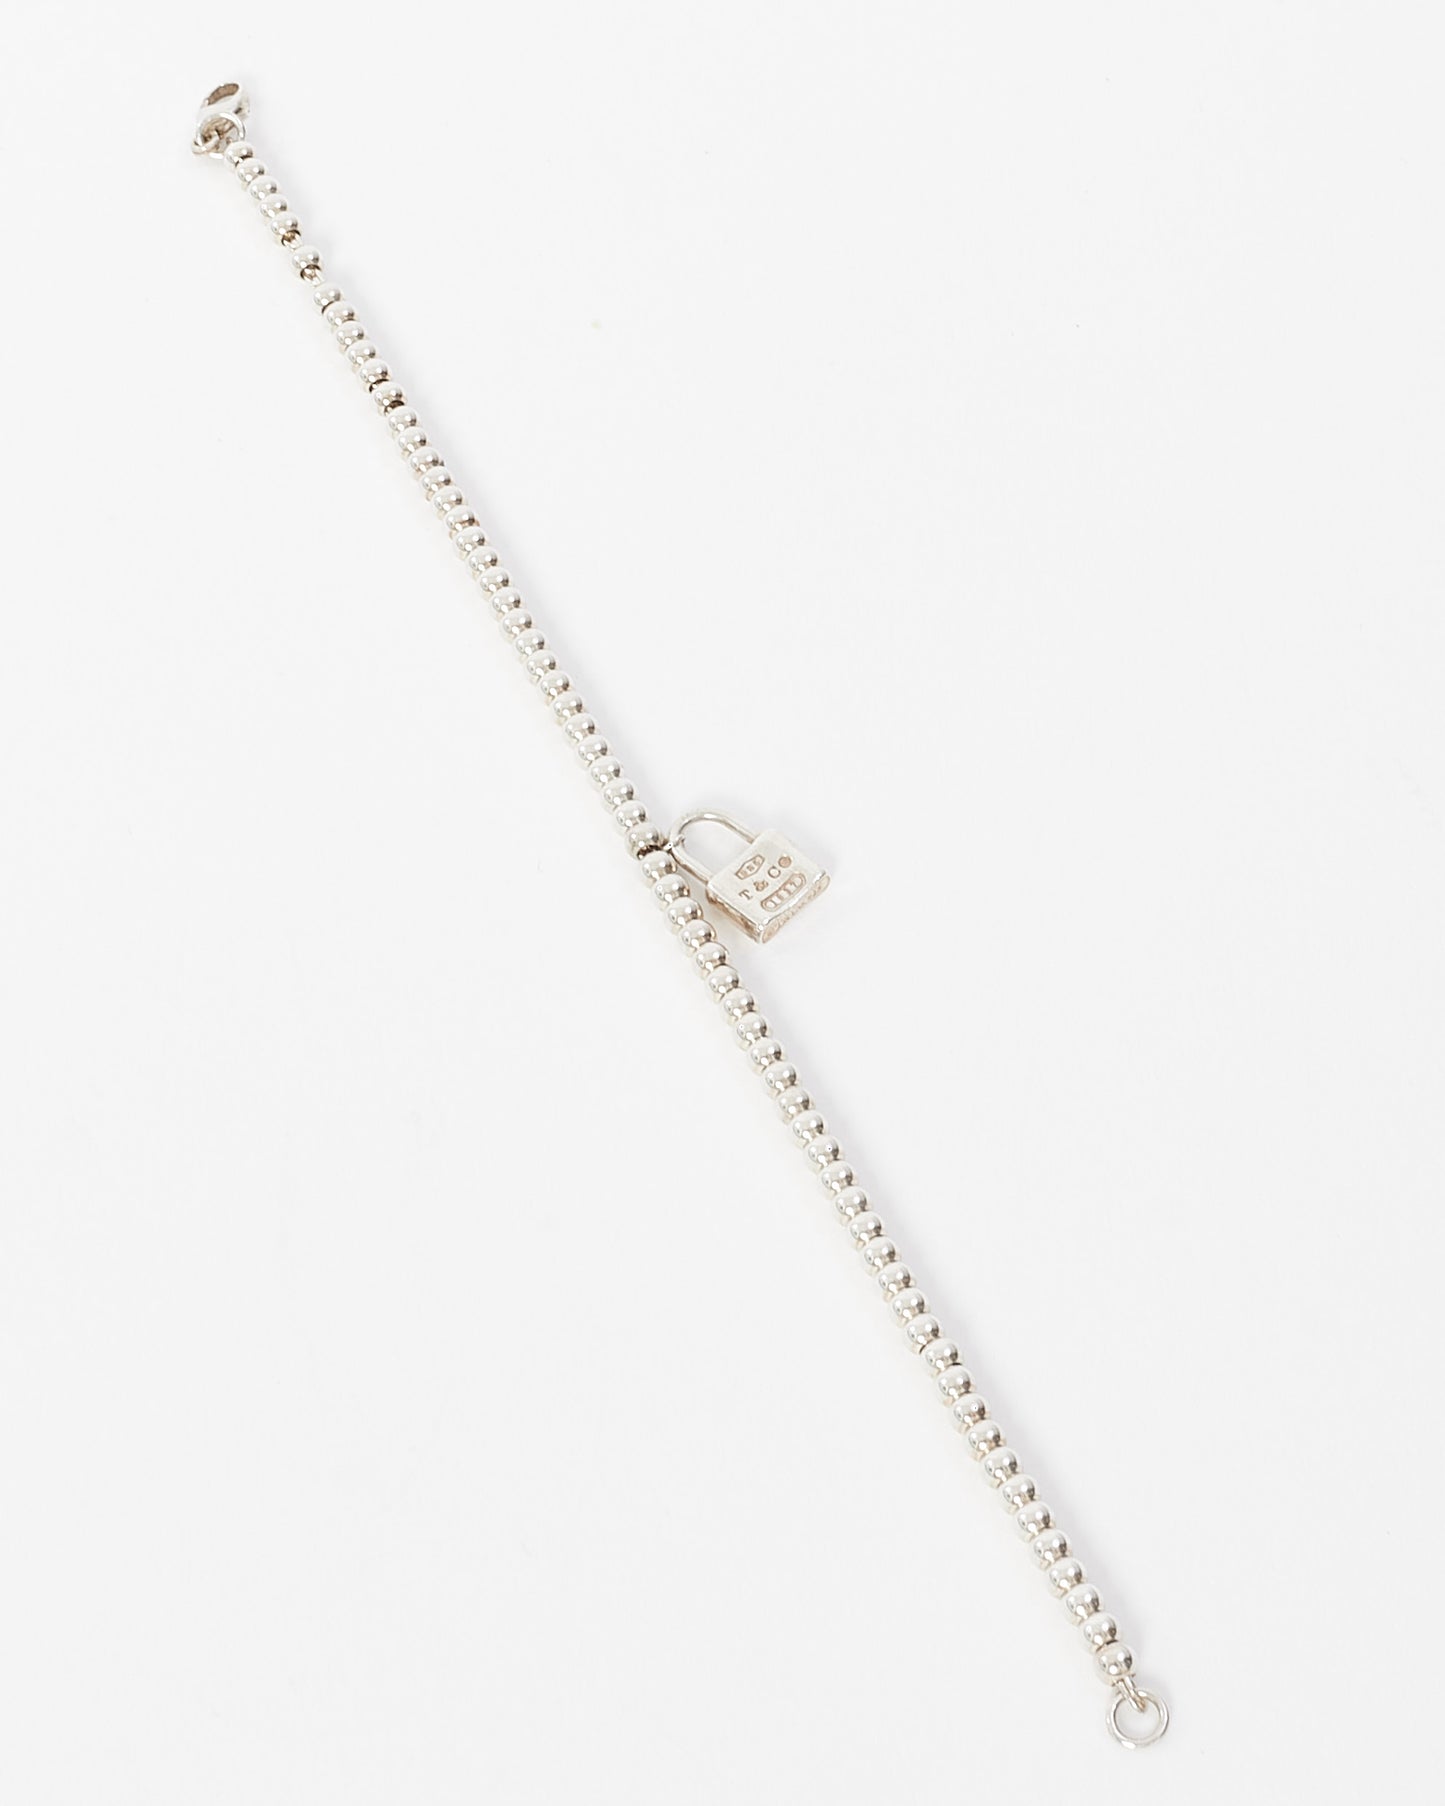 Tiffany & Co. Silver Beaded Lock Charm Bracelet